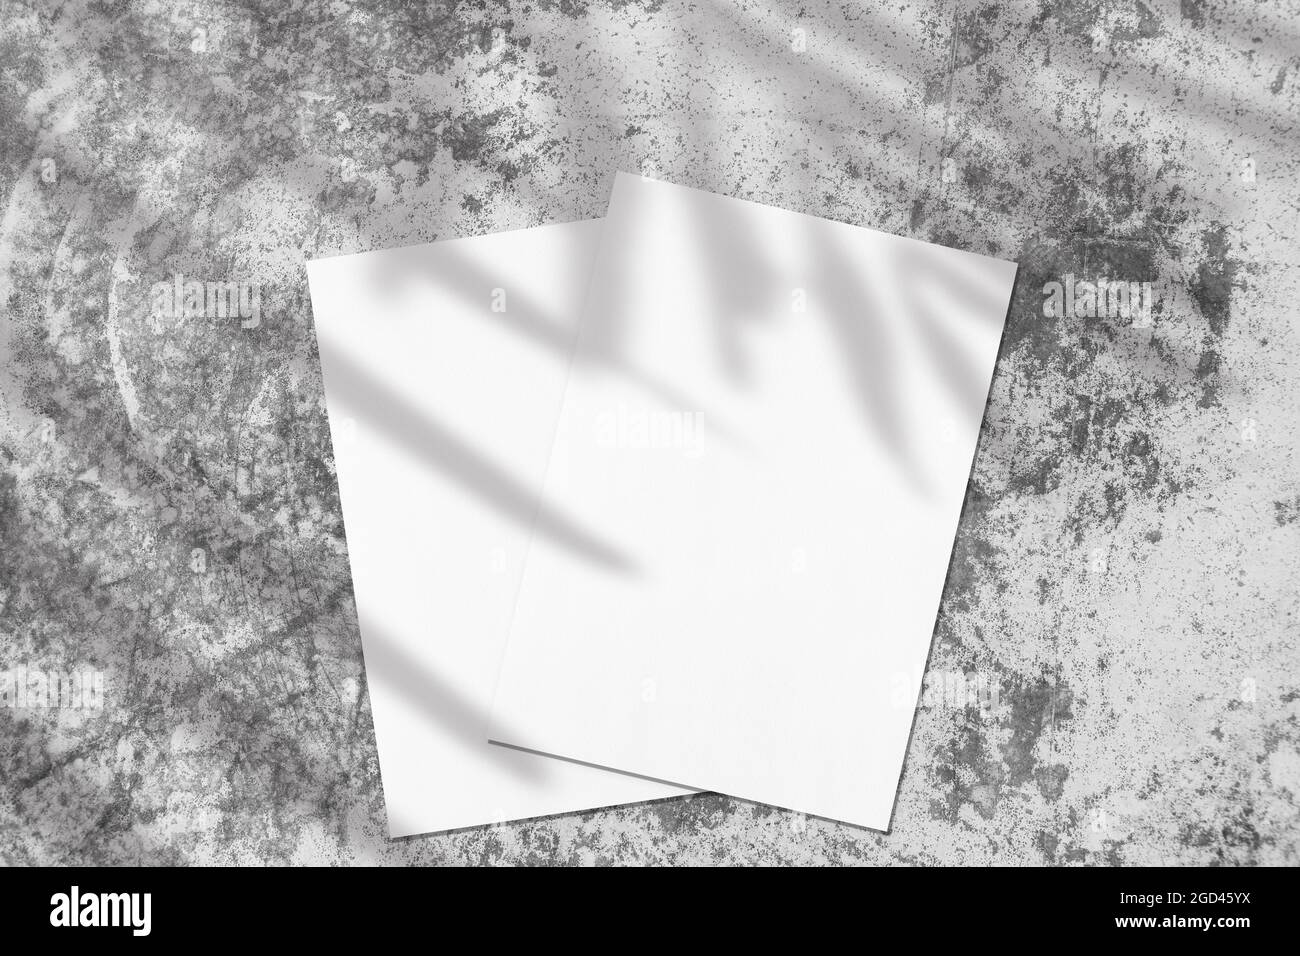 Zwei leere, weiße rechteckige Poster-Diagonalmockups mit Palmschatten Stockfoto